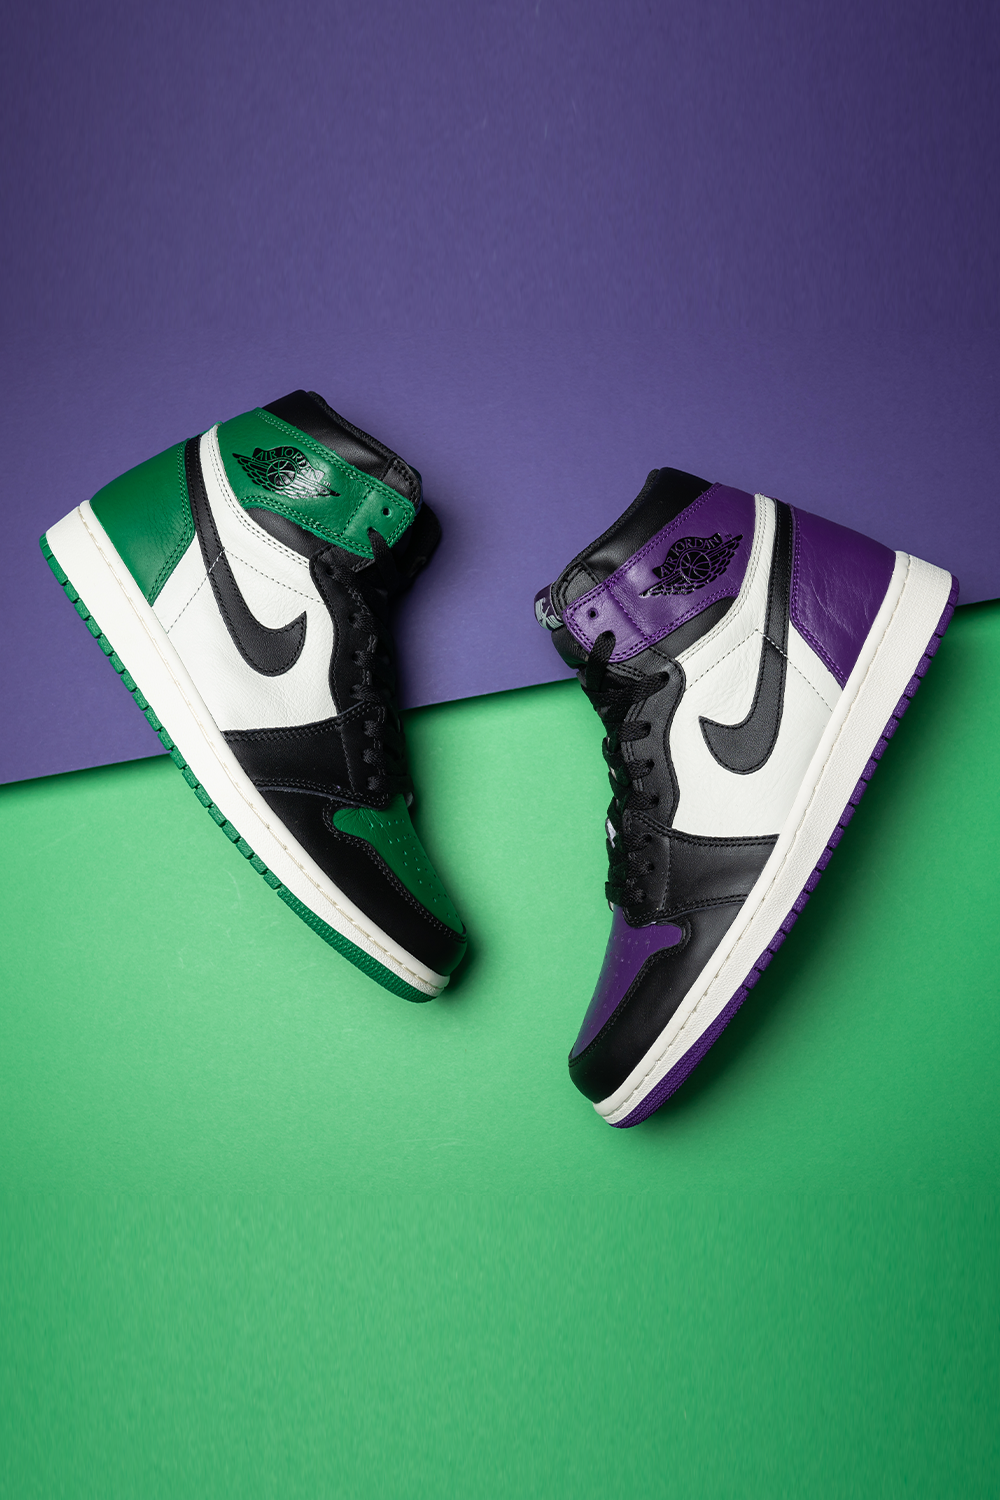 purple and green jordan 1